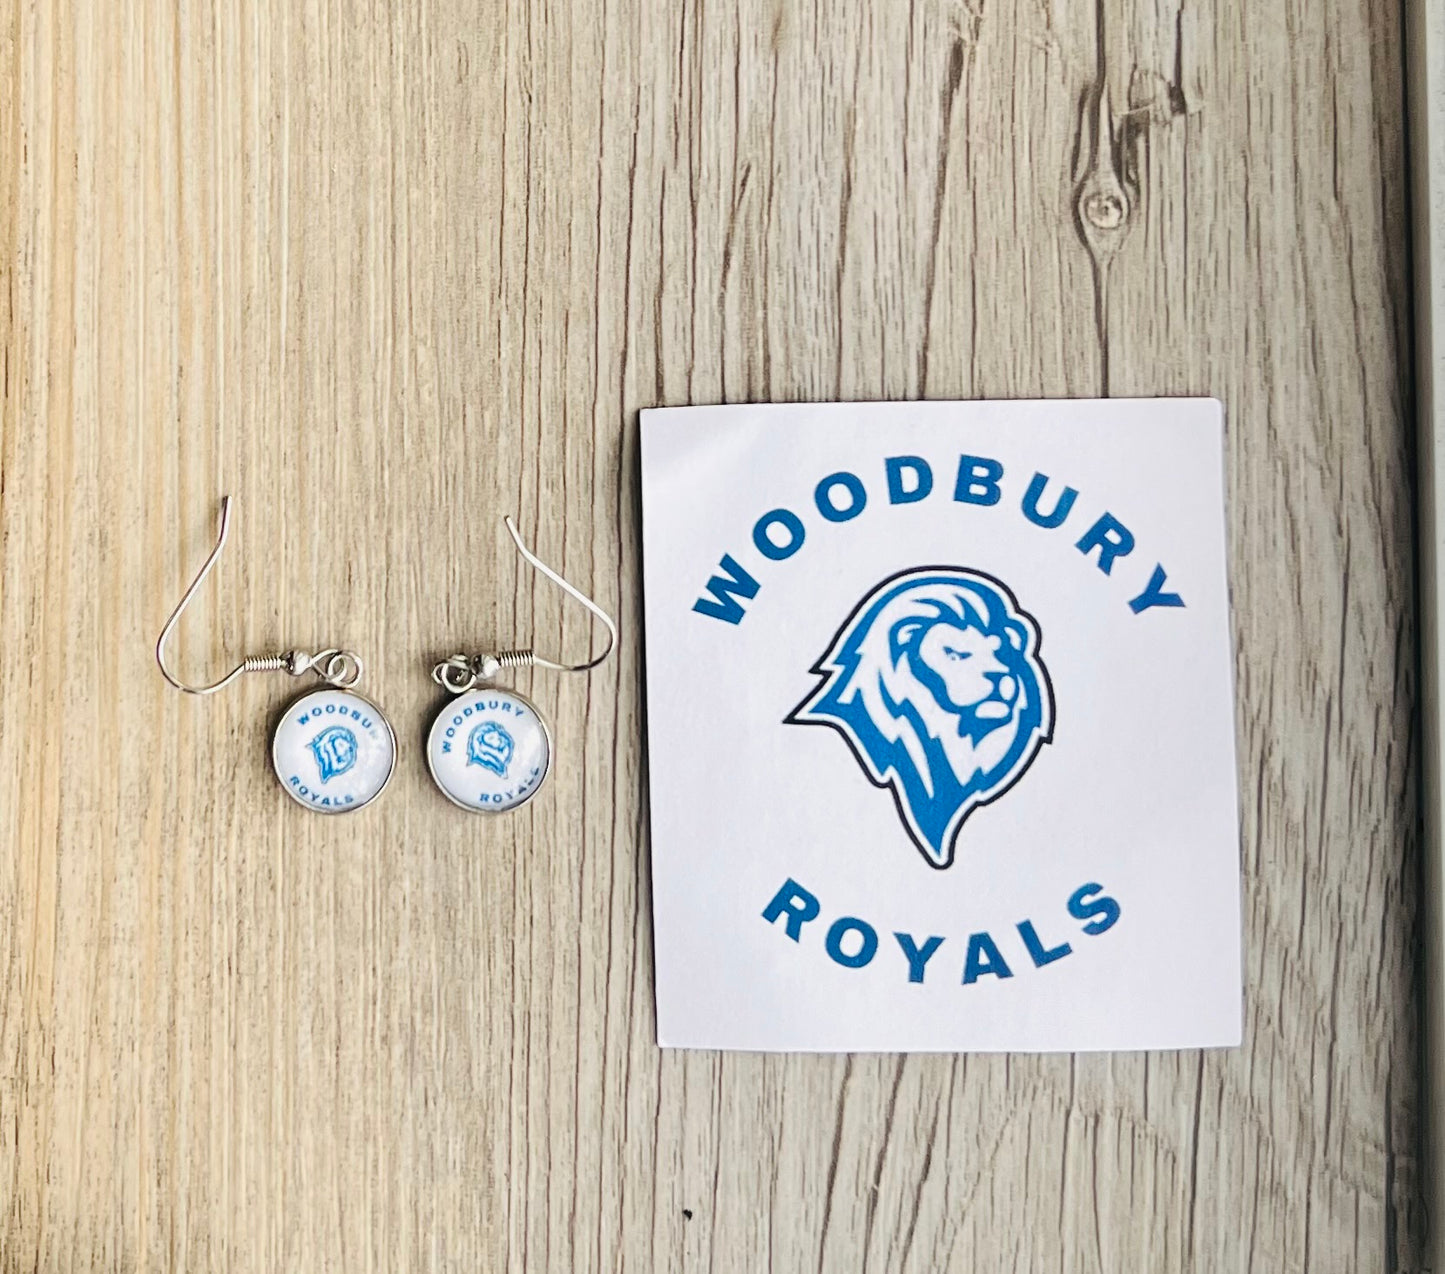 Woodbury Royals Charm Earrings